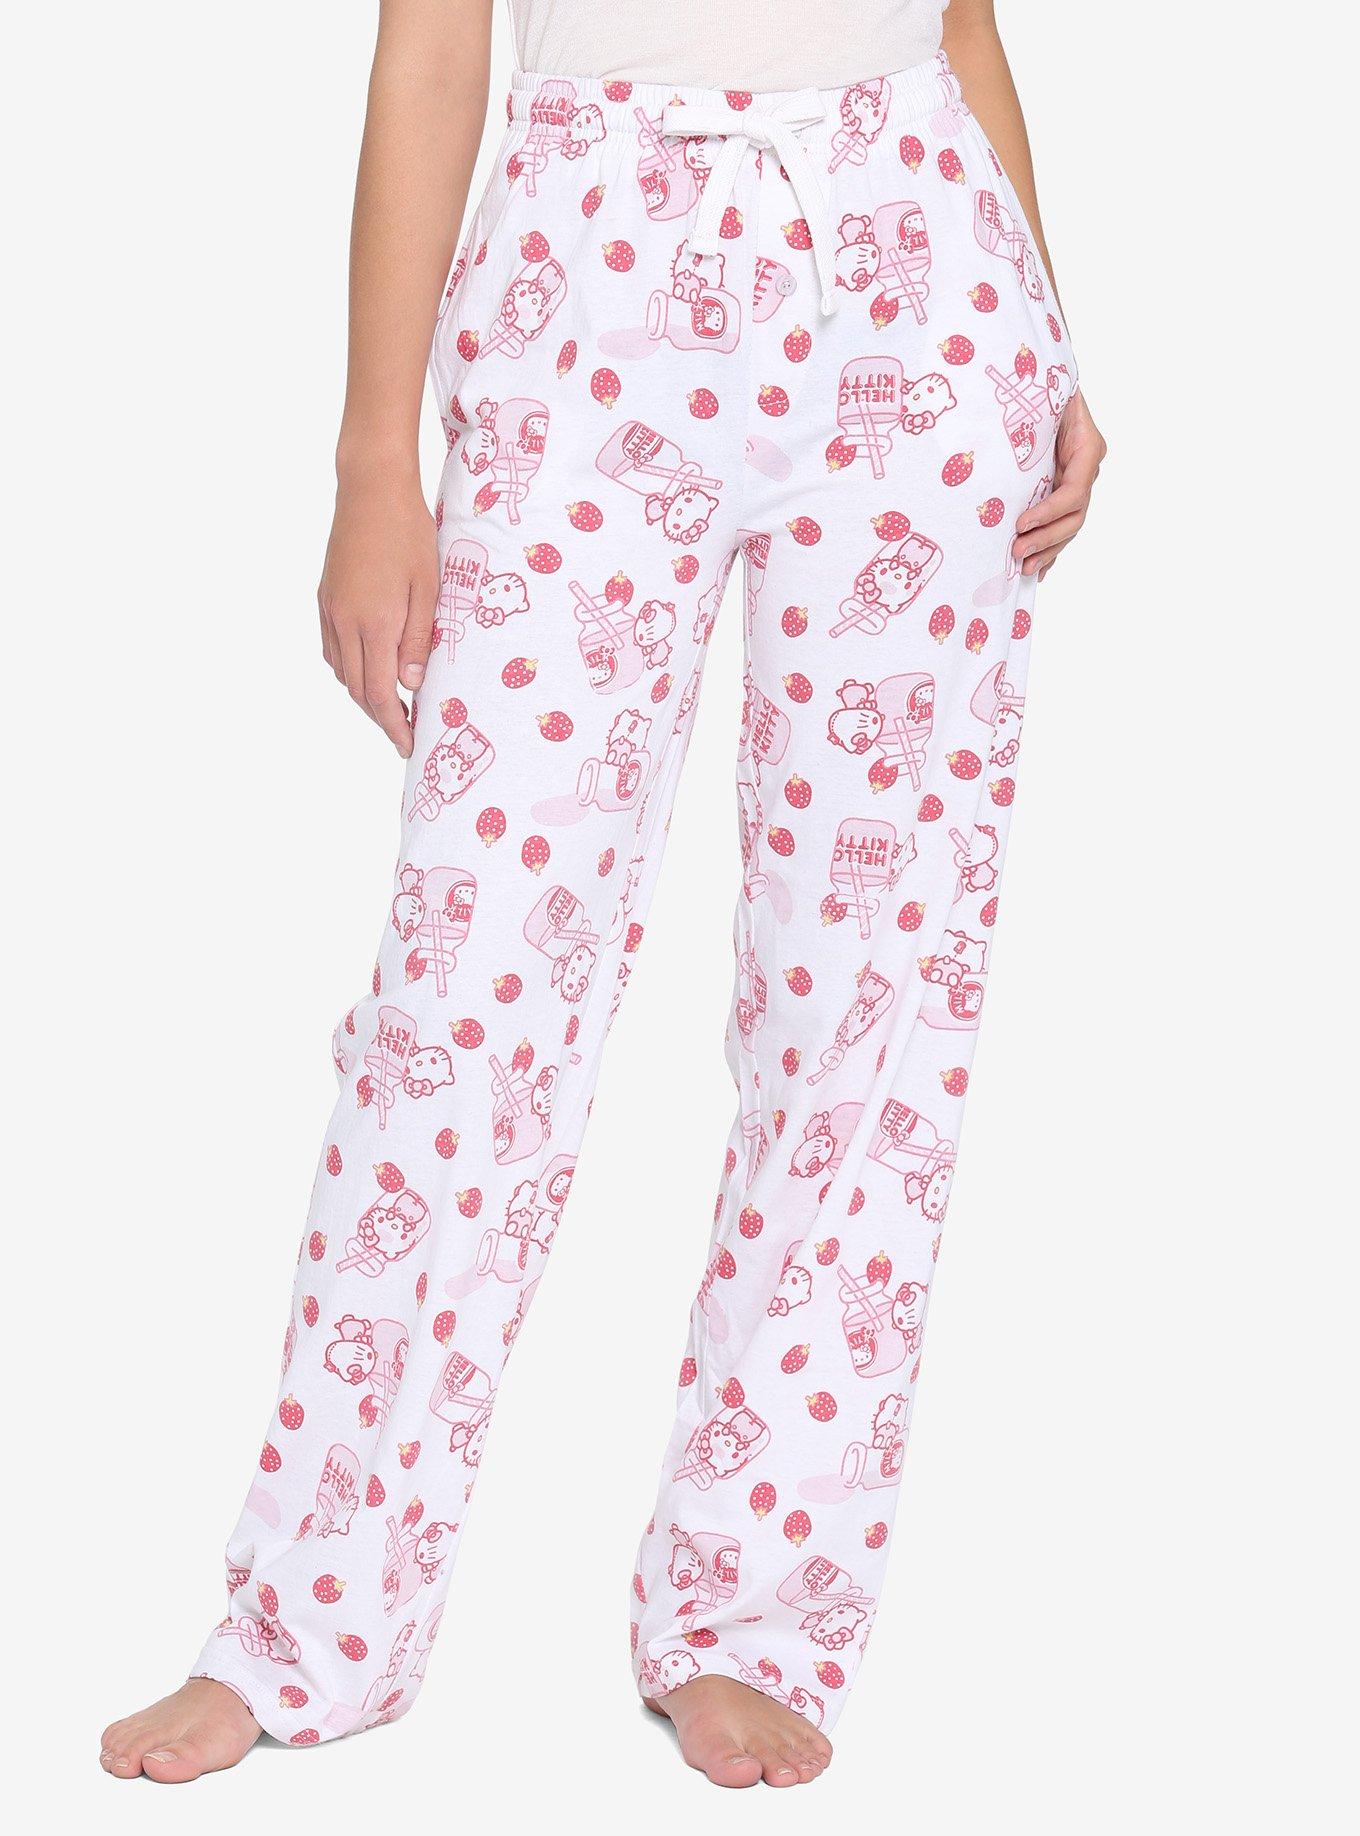 Hello Kitty Pants Pajamas LOUNGE BOTTOM SIZE 4 PINK*EUC*ACTIVEWEAR